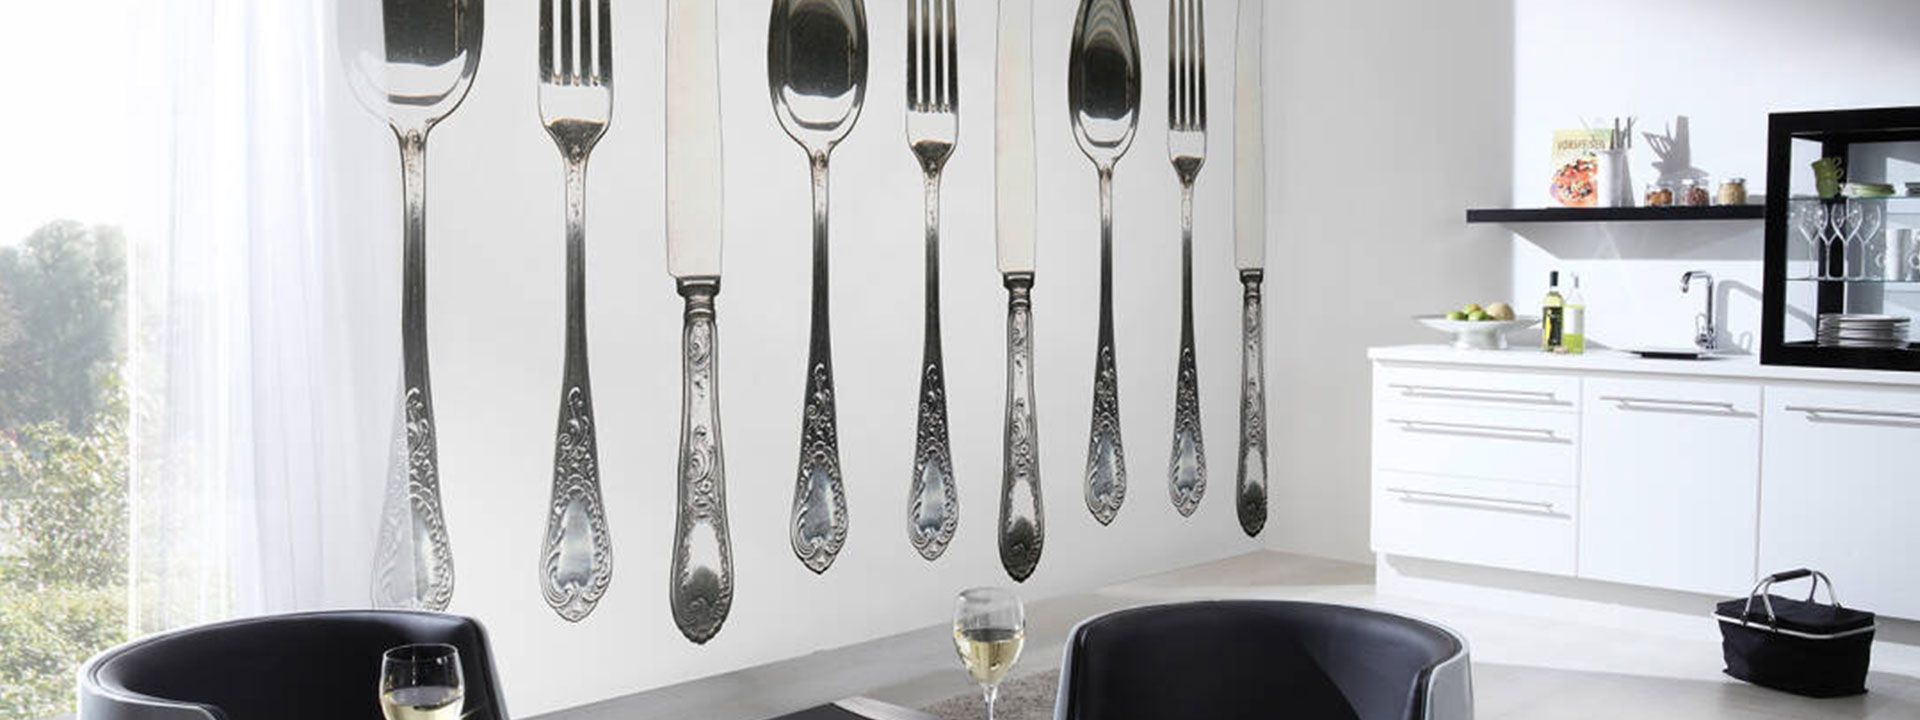 Kitchen photo mural cutlery